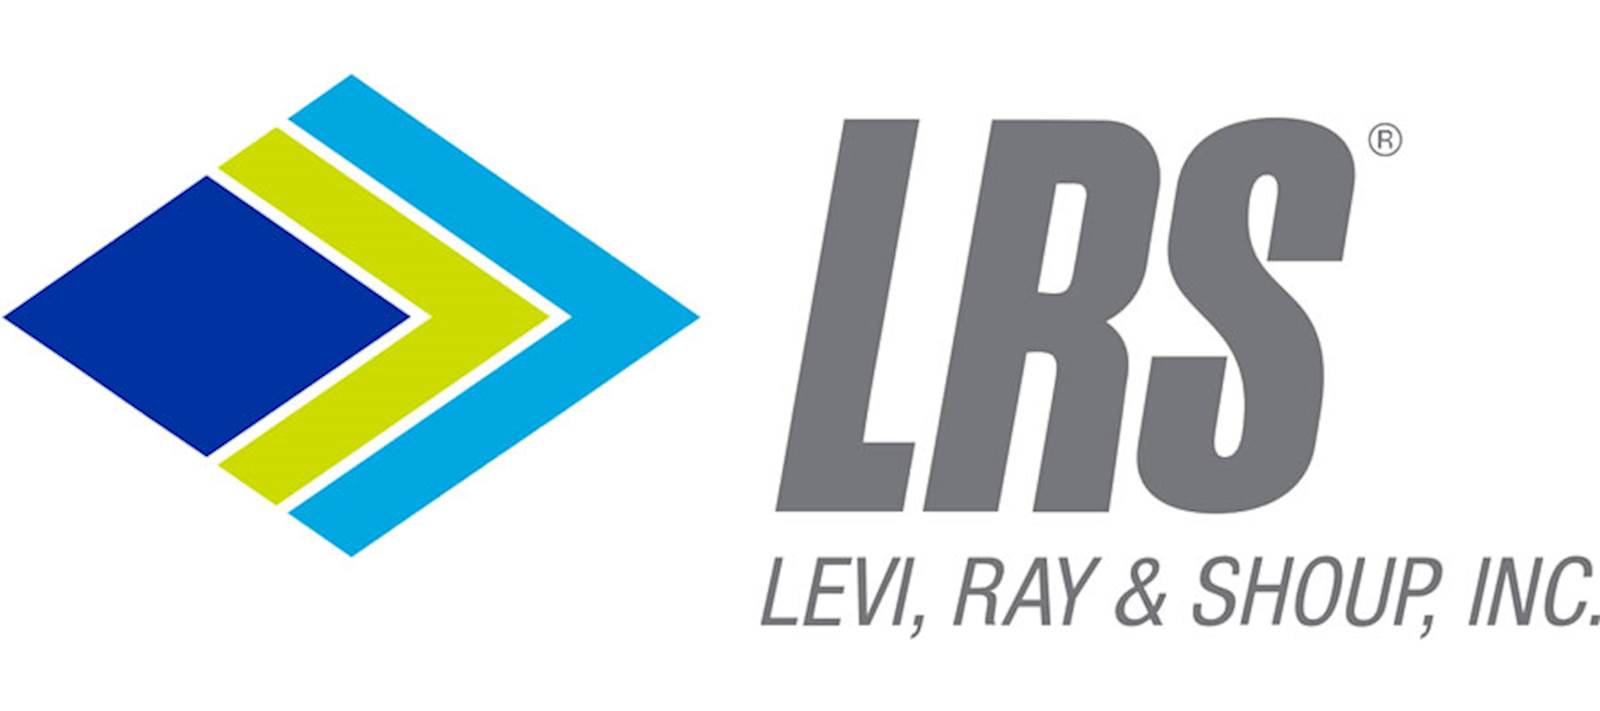 LRS Leadership Team | Levi, Ray & Shoup, Inc.